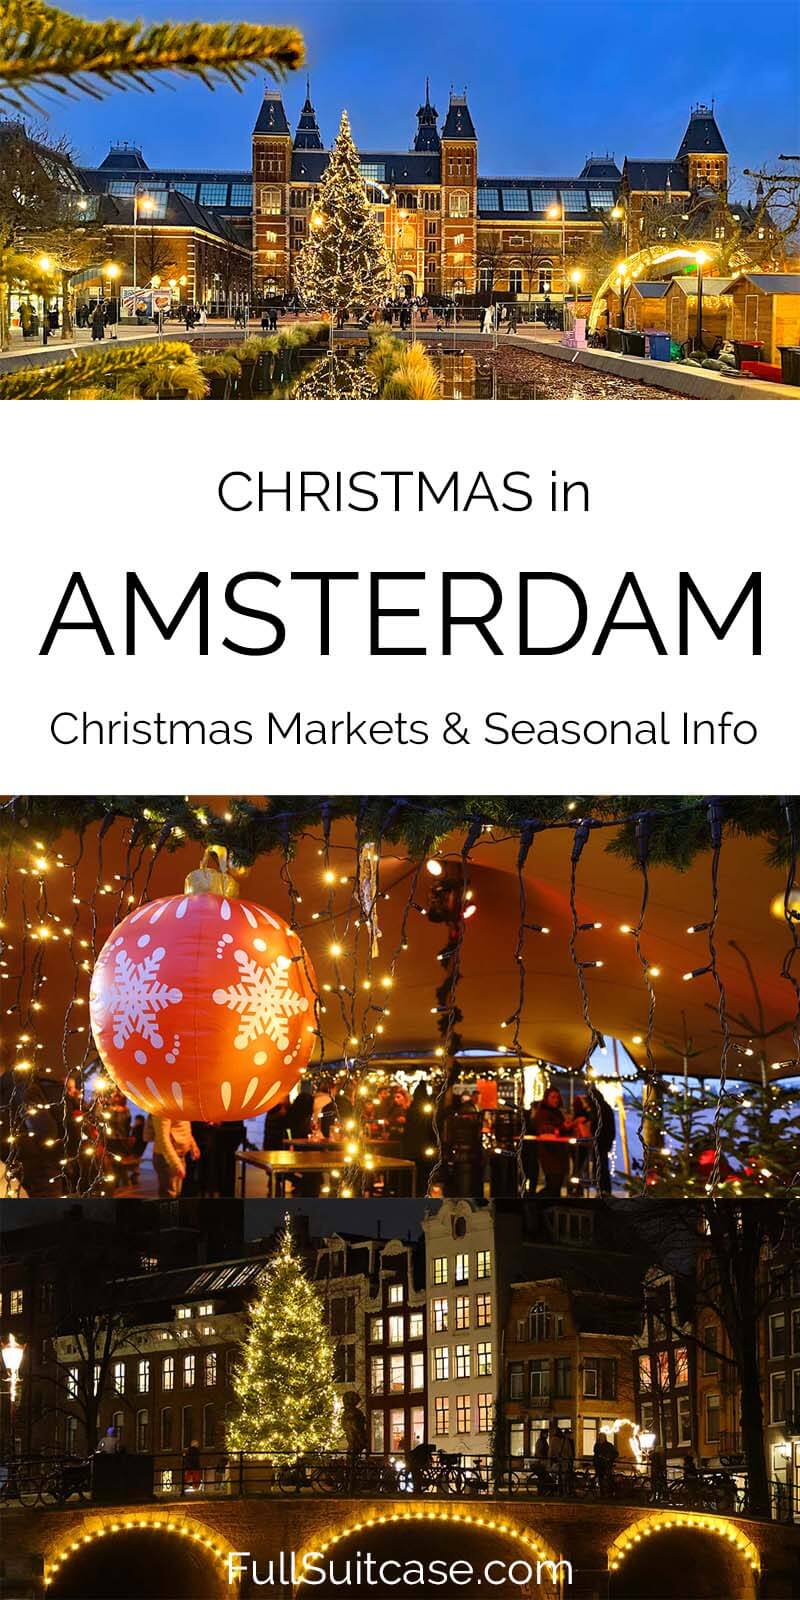 Amsterdam on Christmas - holiday season travel guide